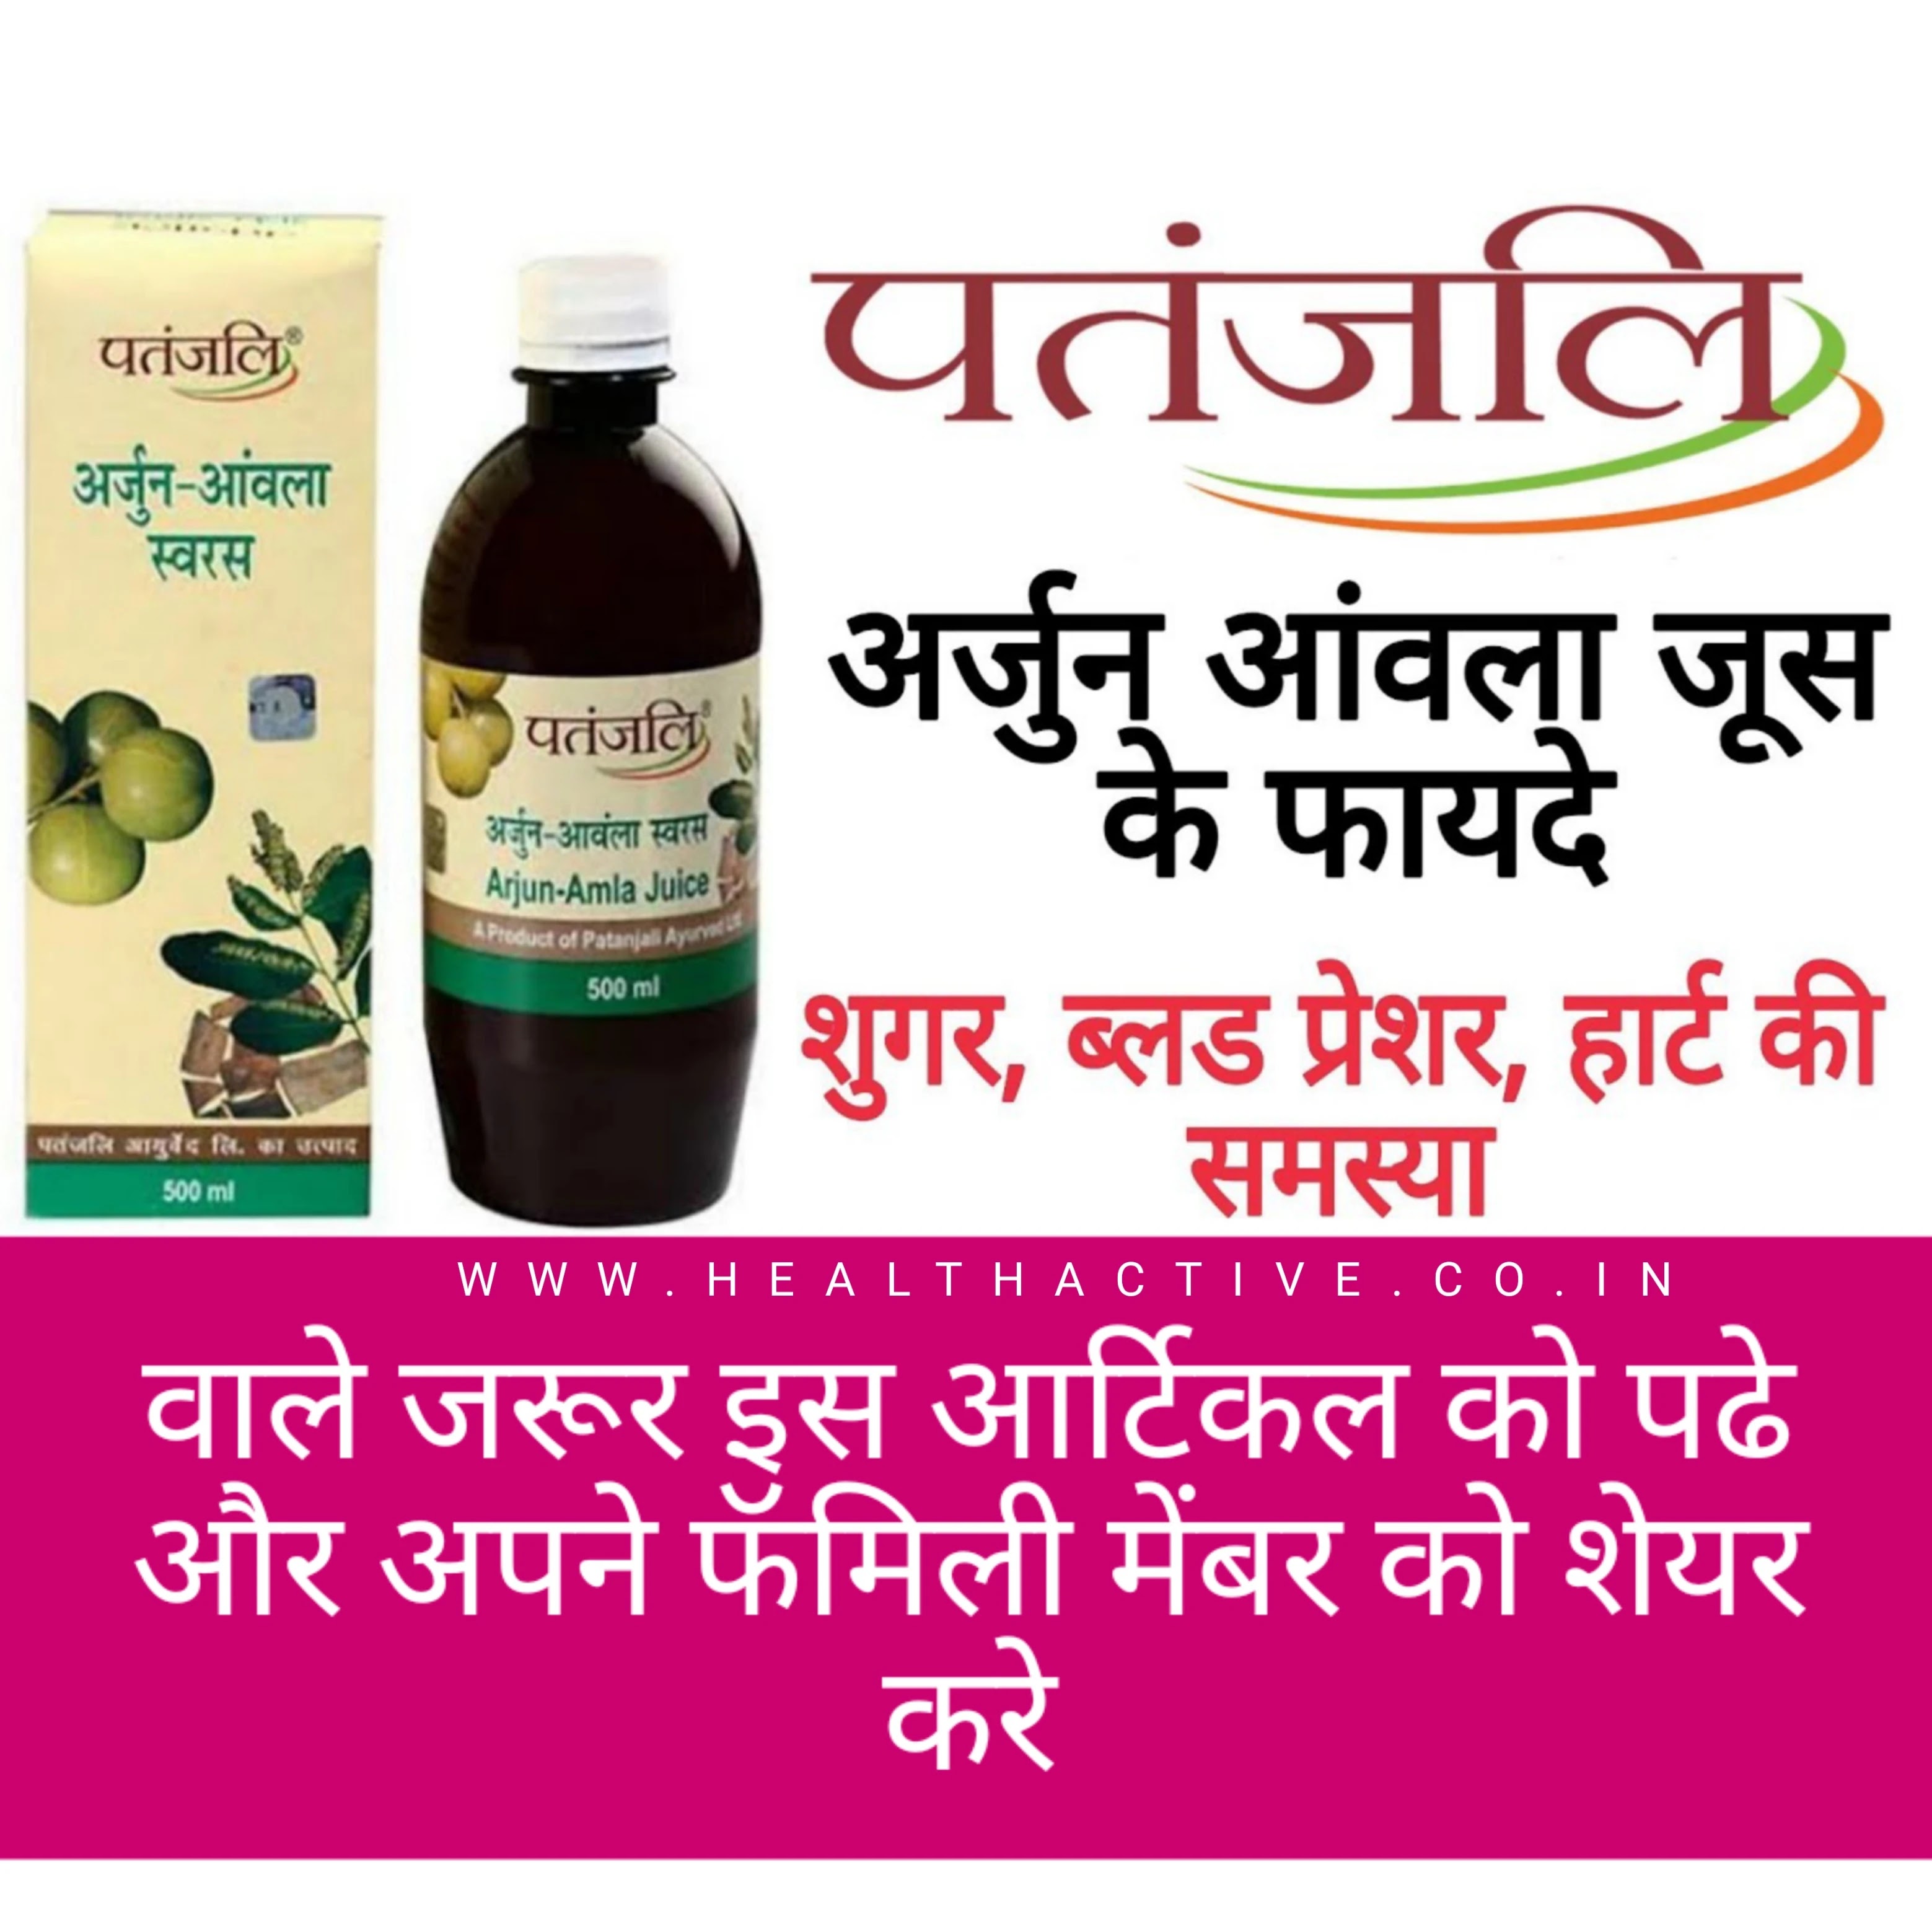 Benefits of Patanjali Arjun Amla Juice